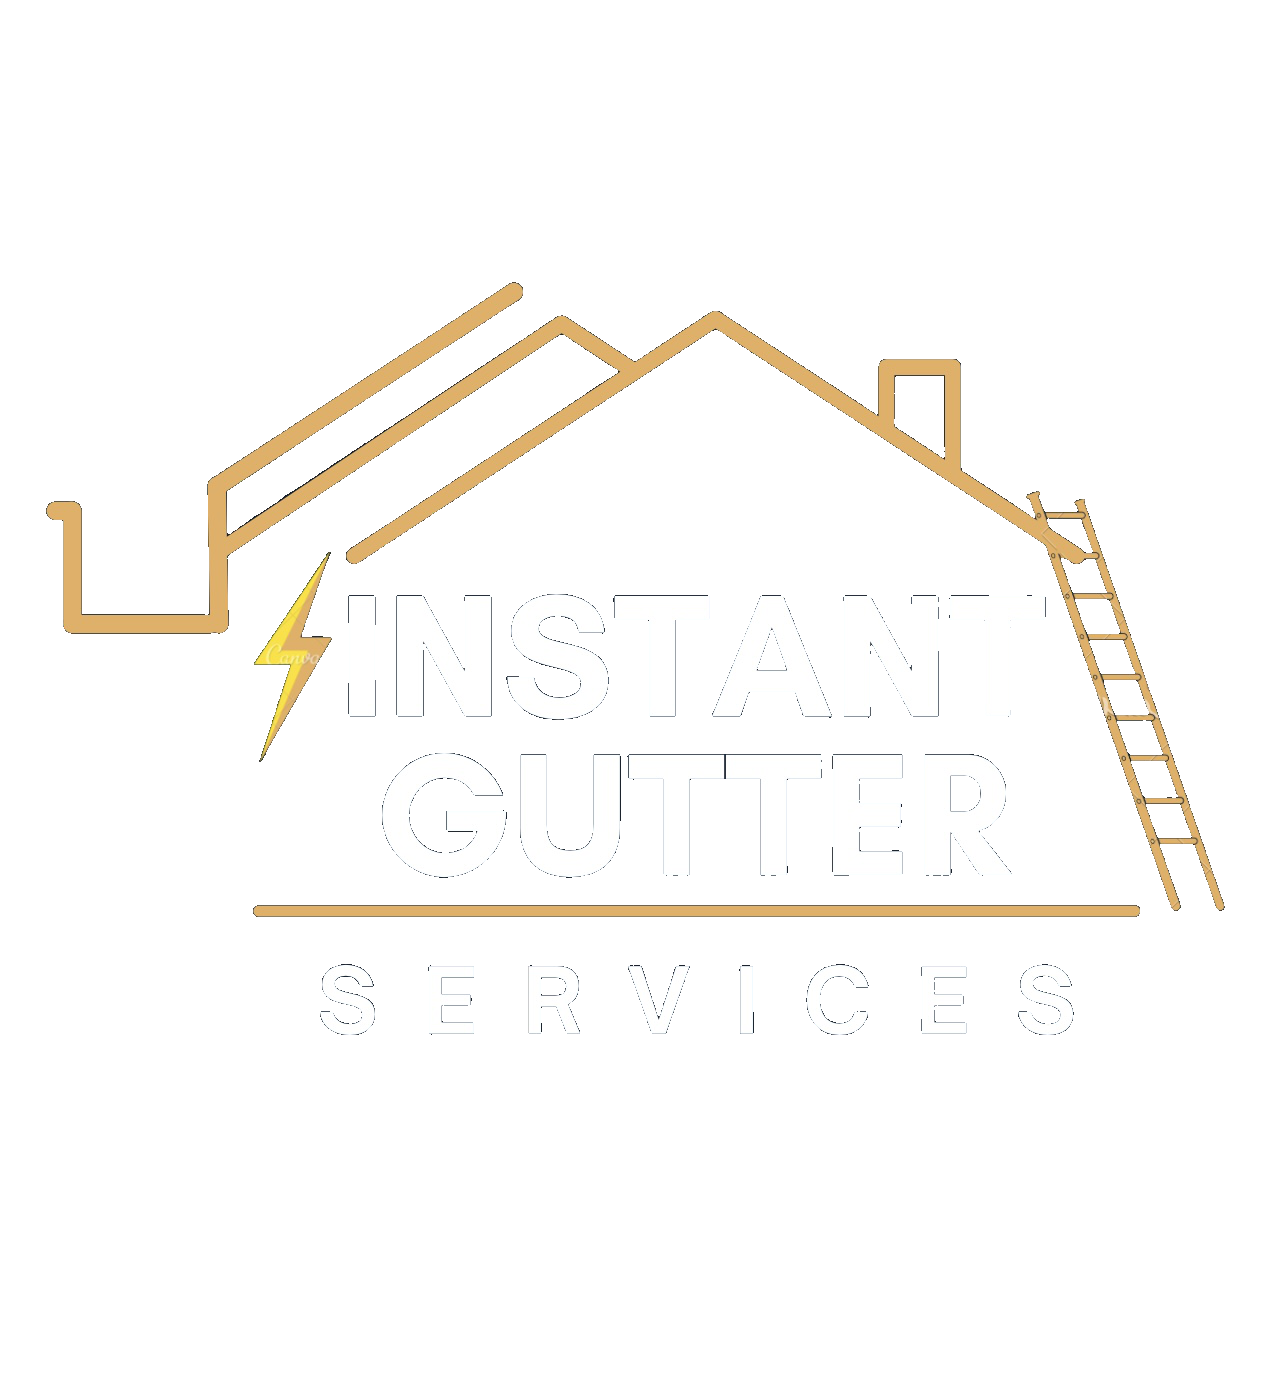 Instant Gutter Services